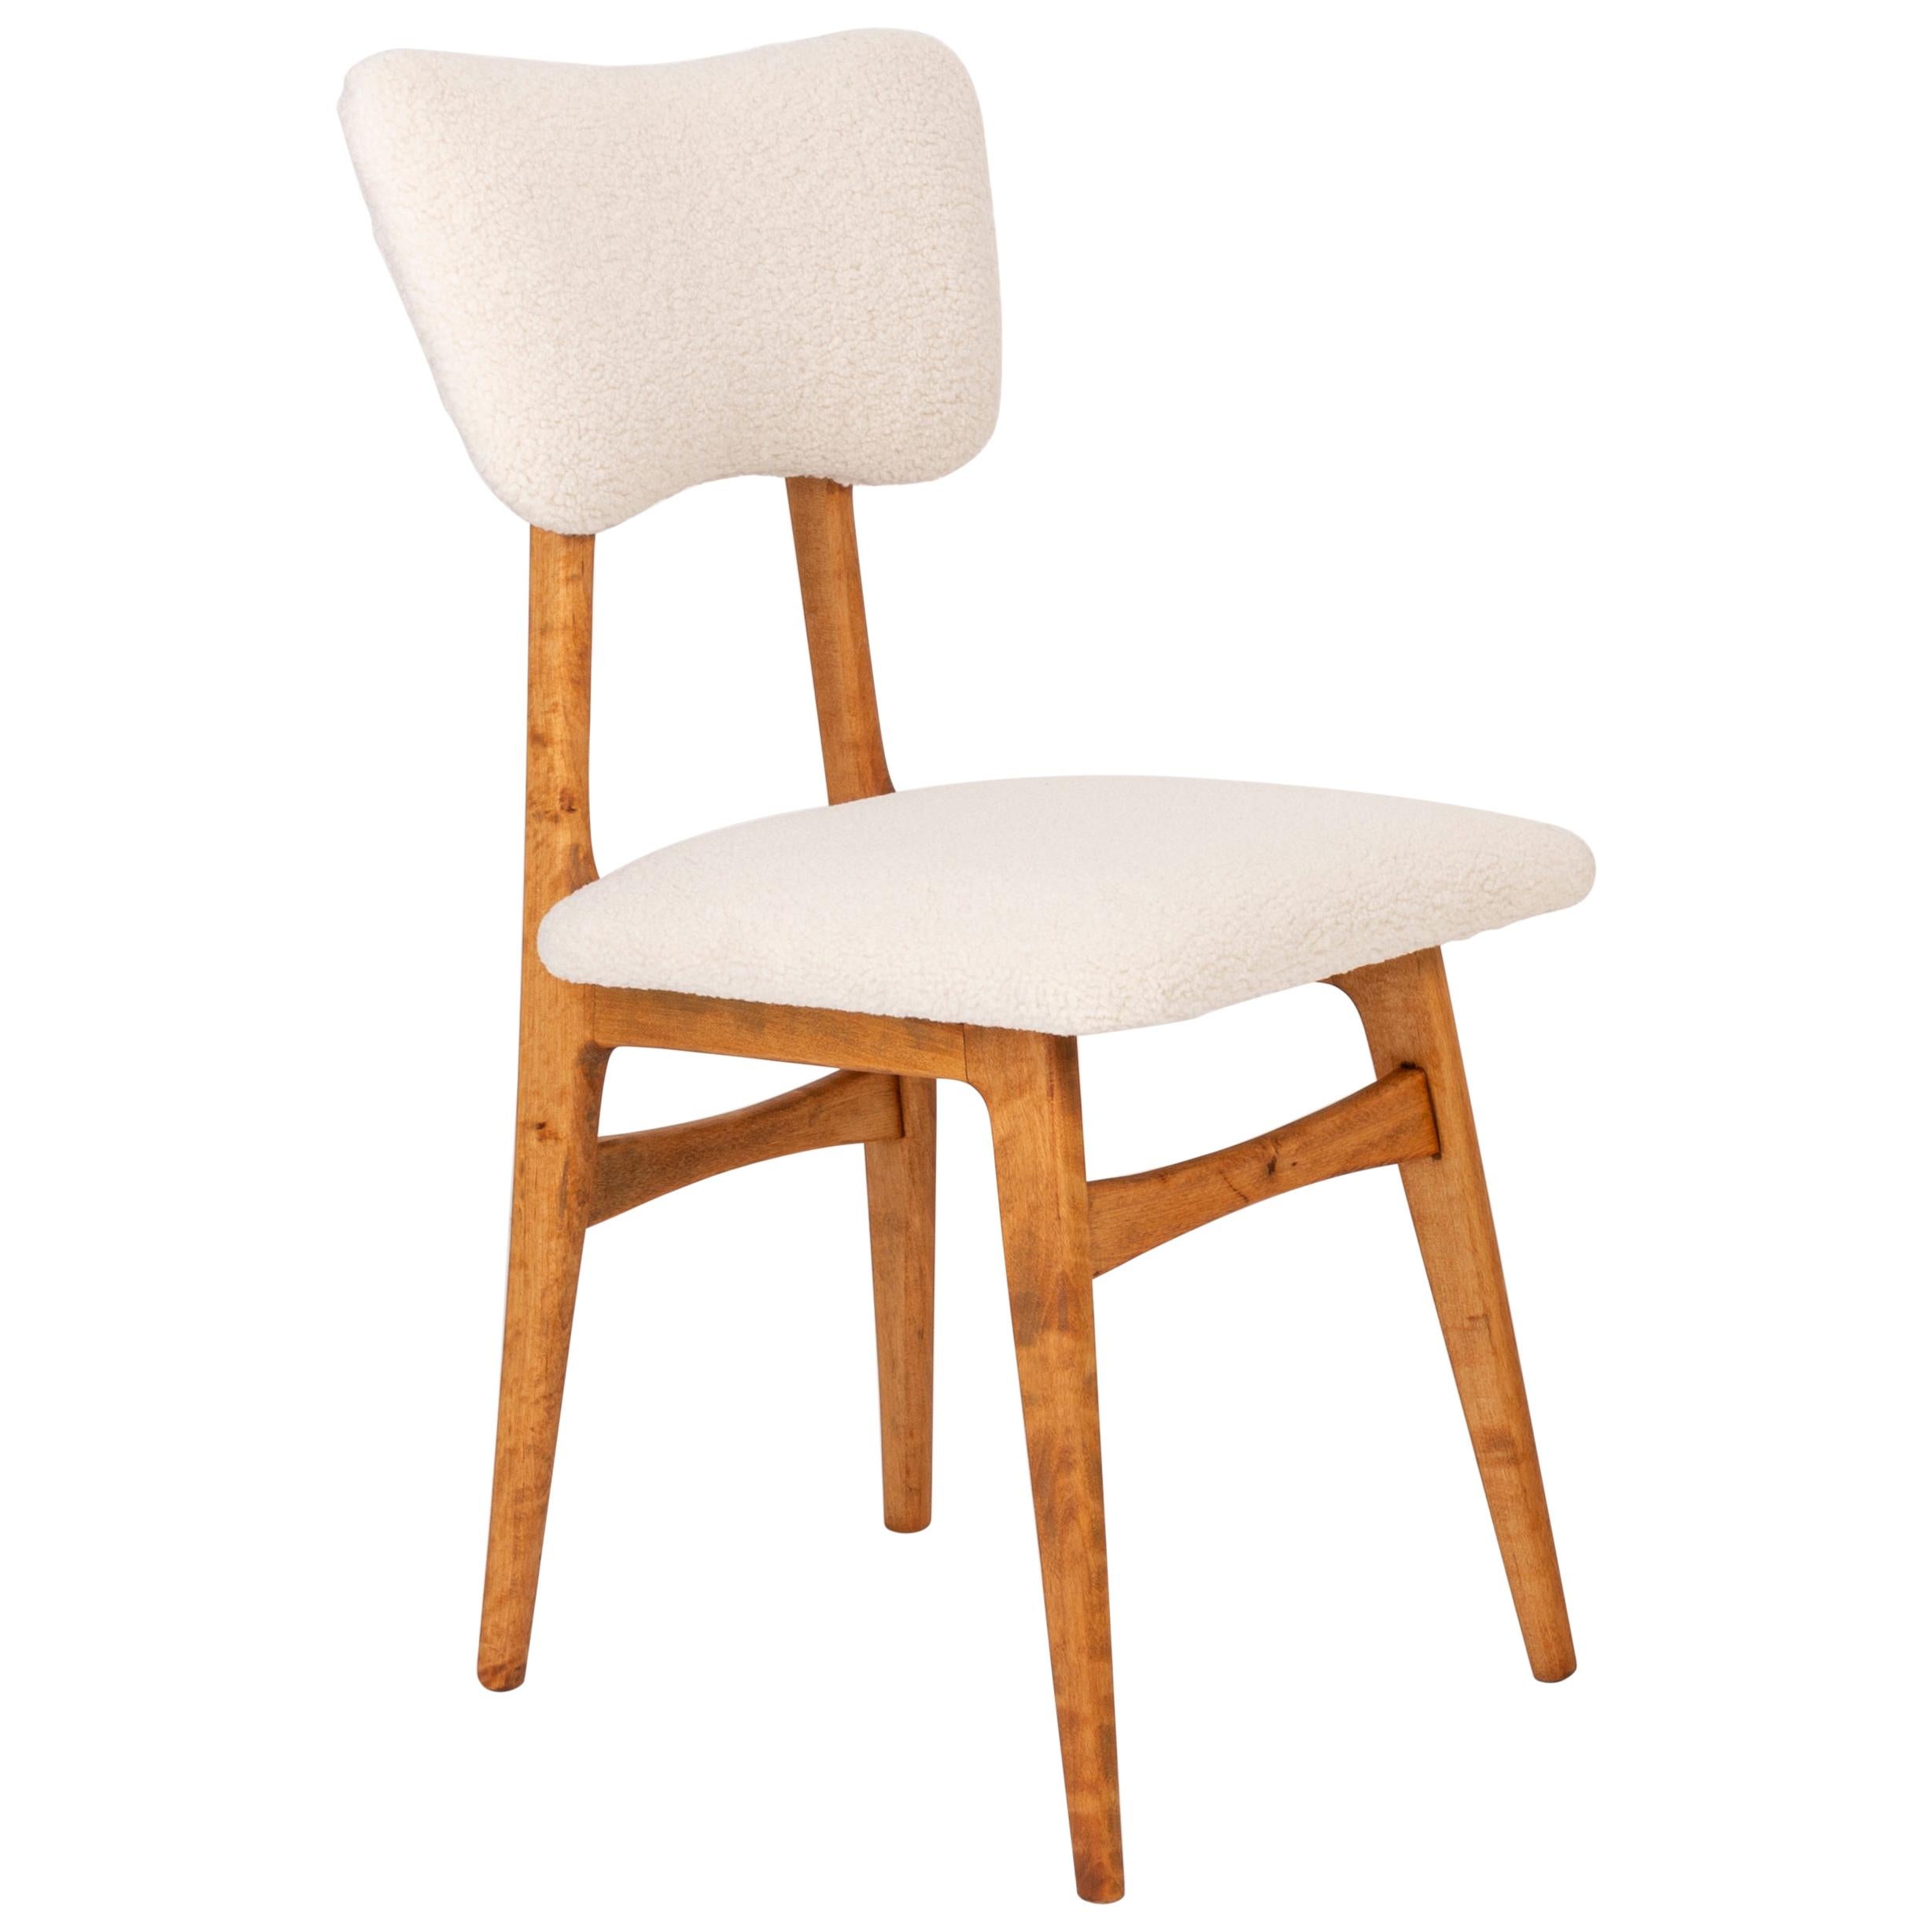 Light Crme Boucle-Stuhl des 20. Jahrhunderts, 1960er Jahre